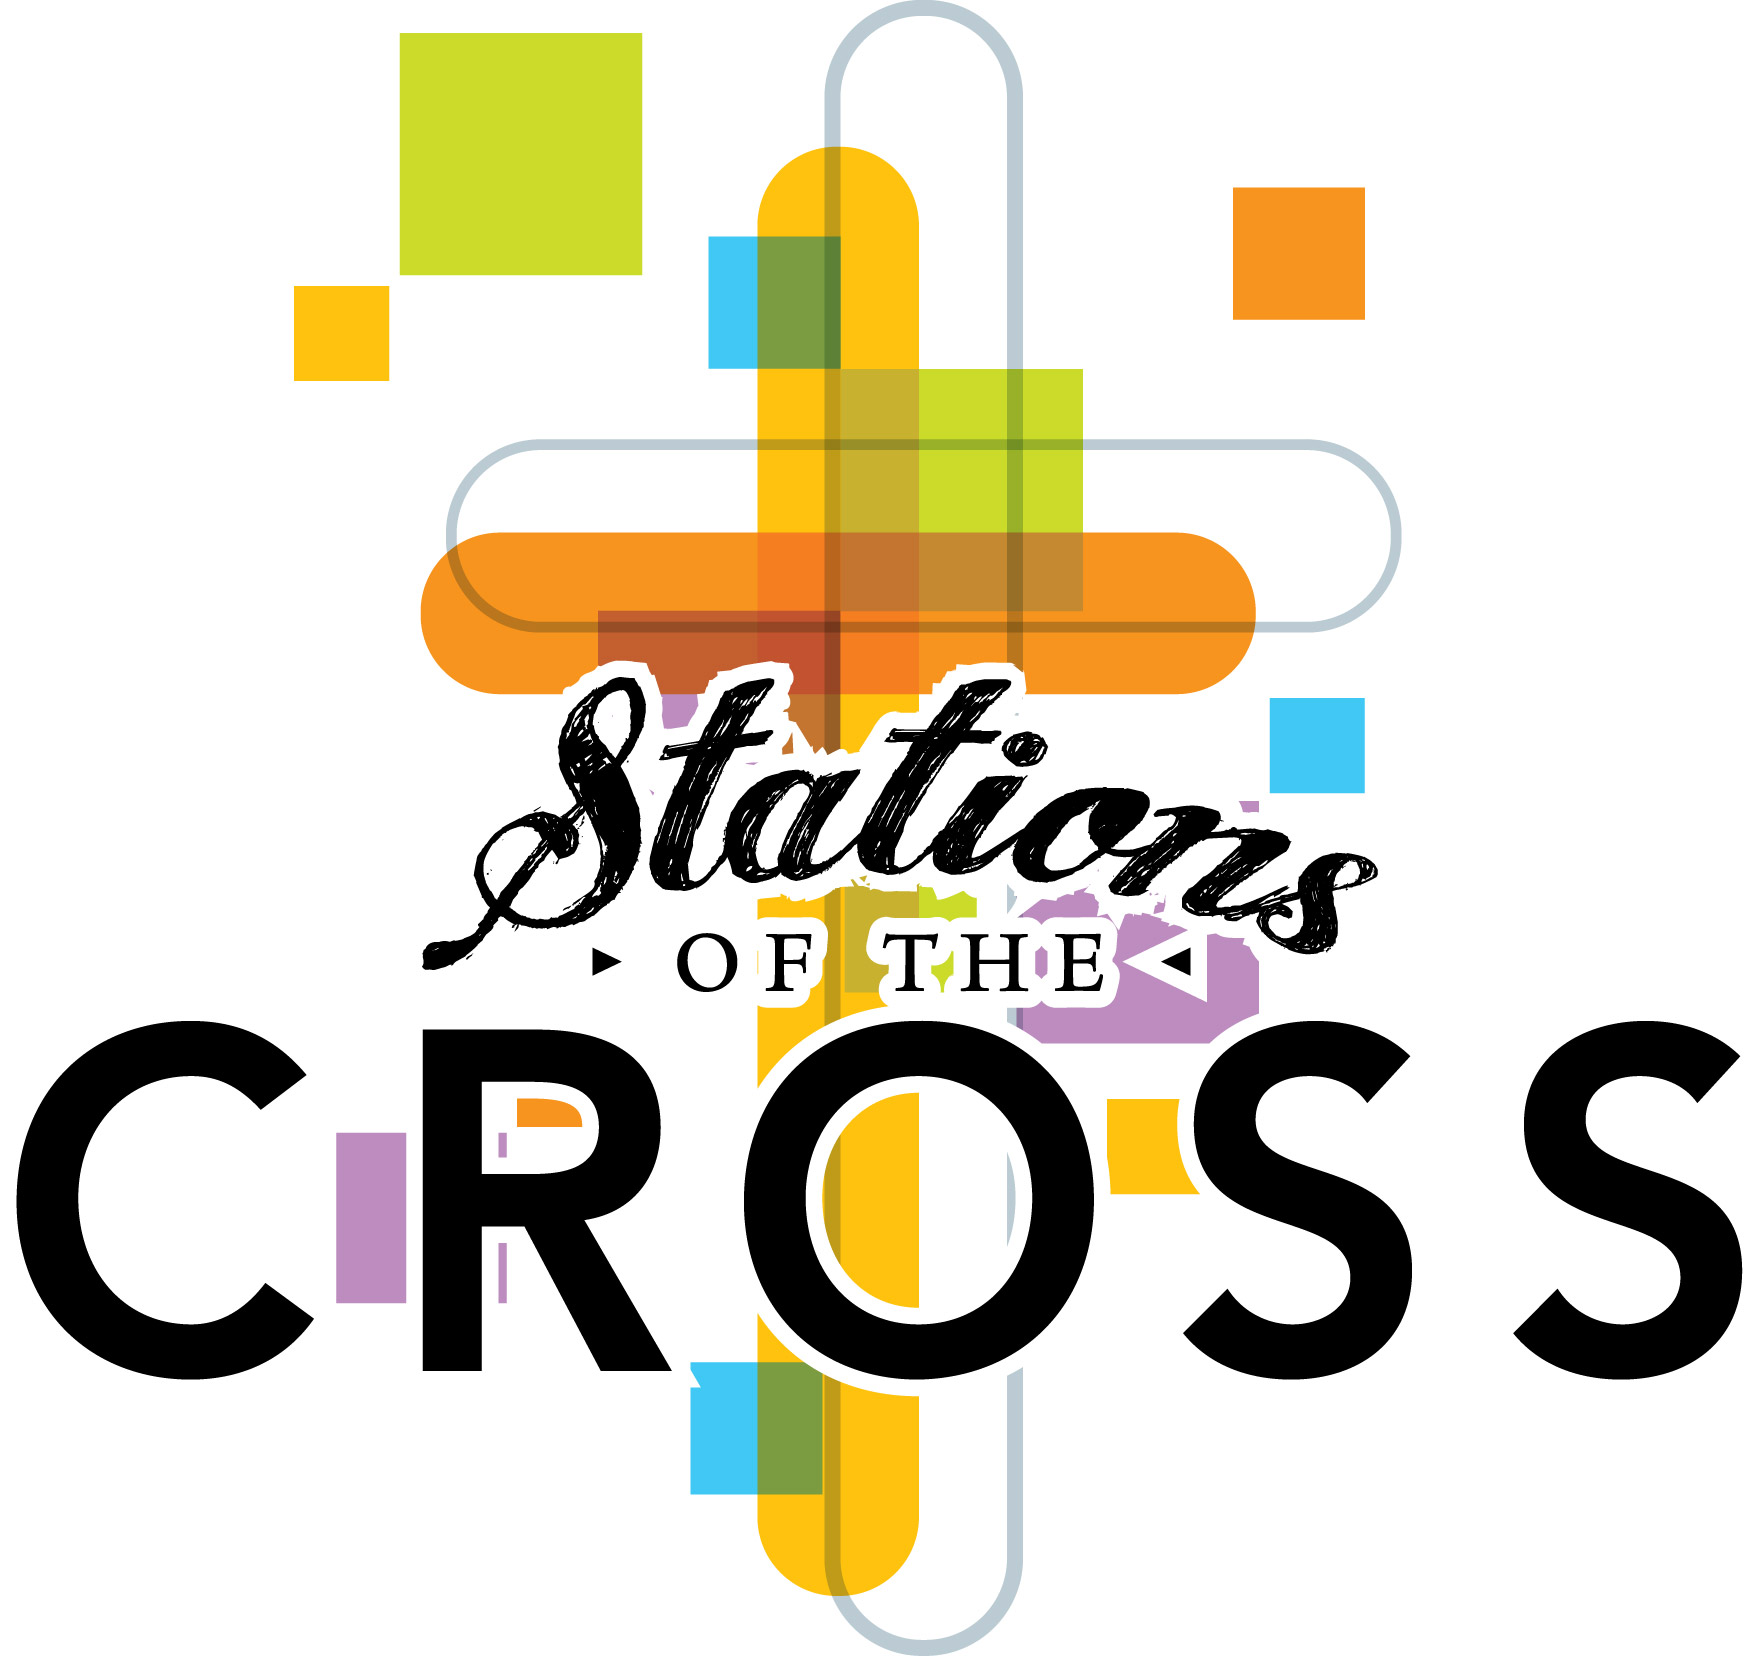 Stations of the Cross | St. John's Episcopal Church